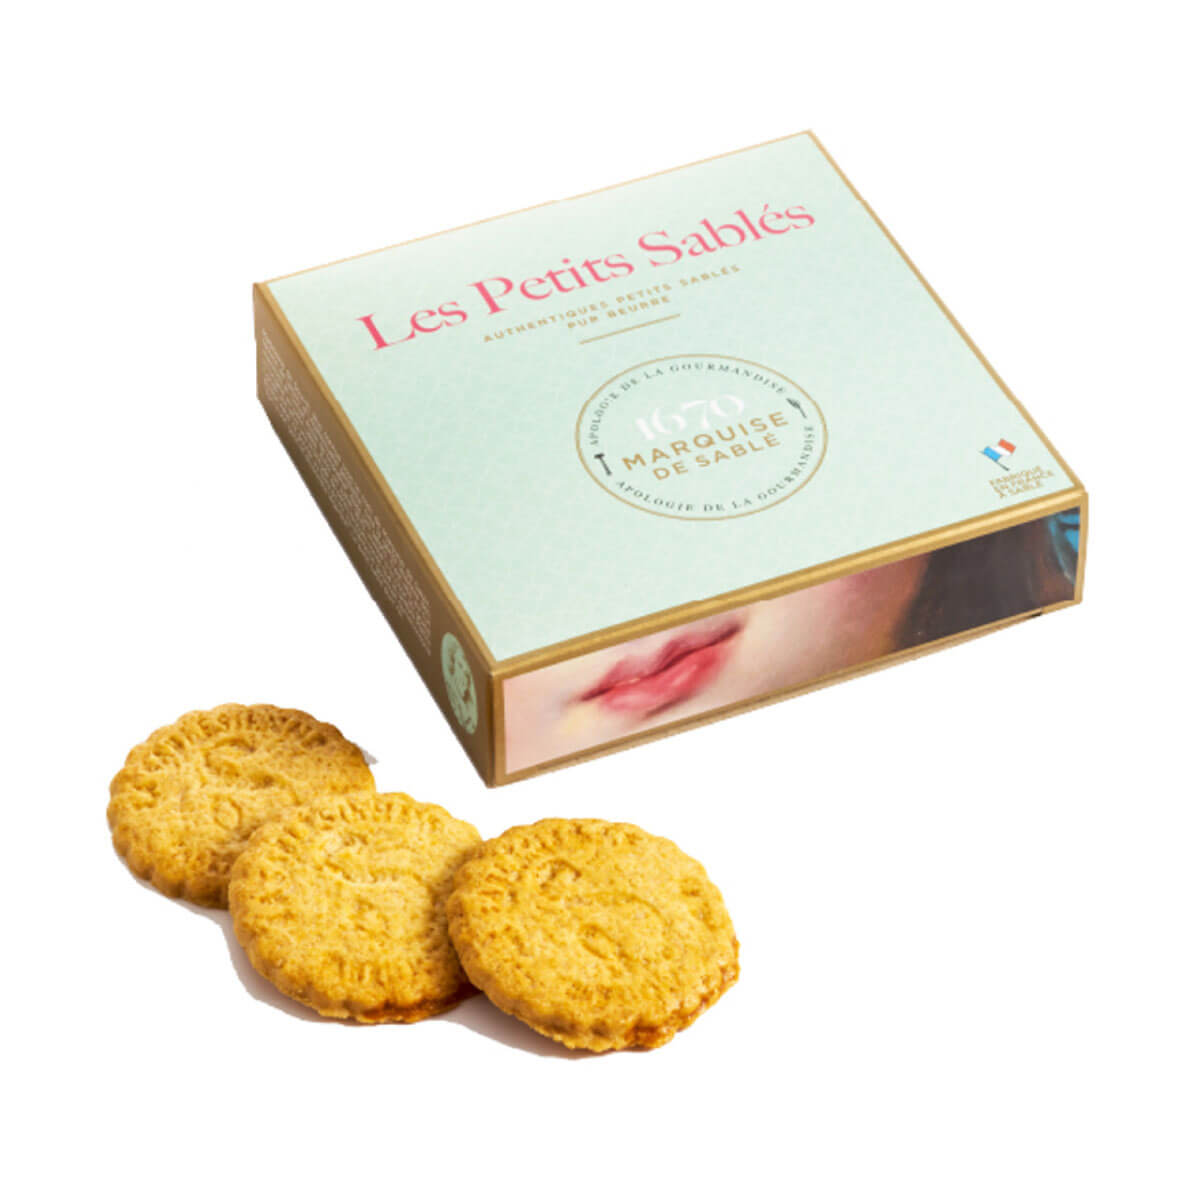 La Sablesienne Shortbread Cookies front | MILK MONEY milkmoney.co | white elephant gift ideas, gift, mother's day gift ideas, white elephant gift, gift shops near me